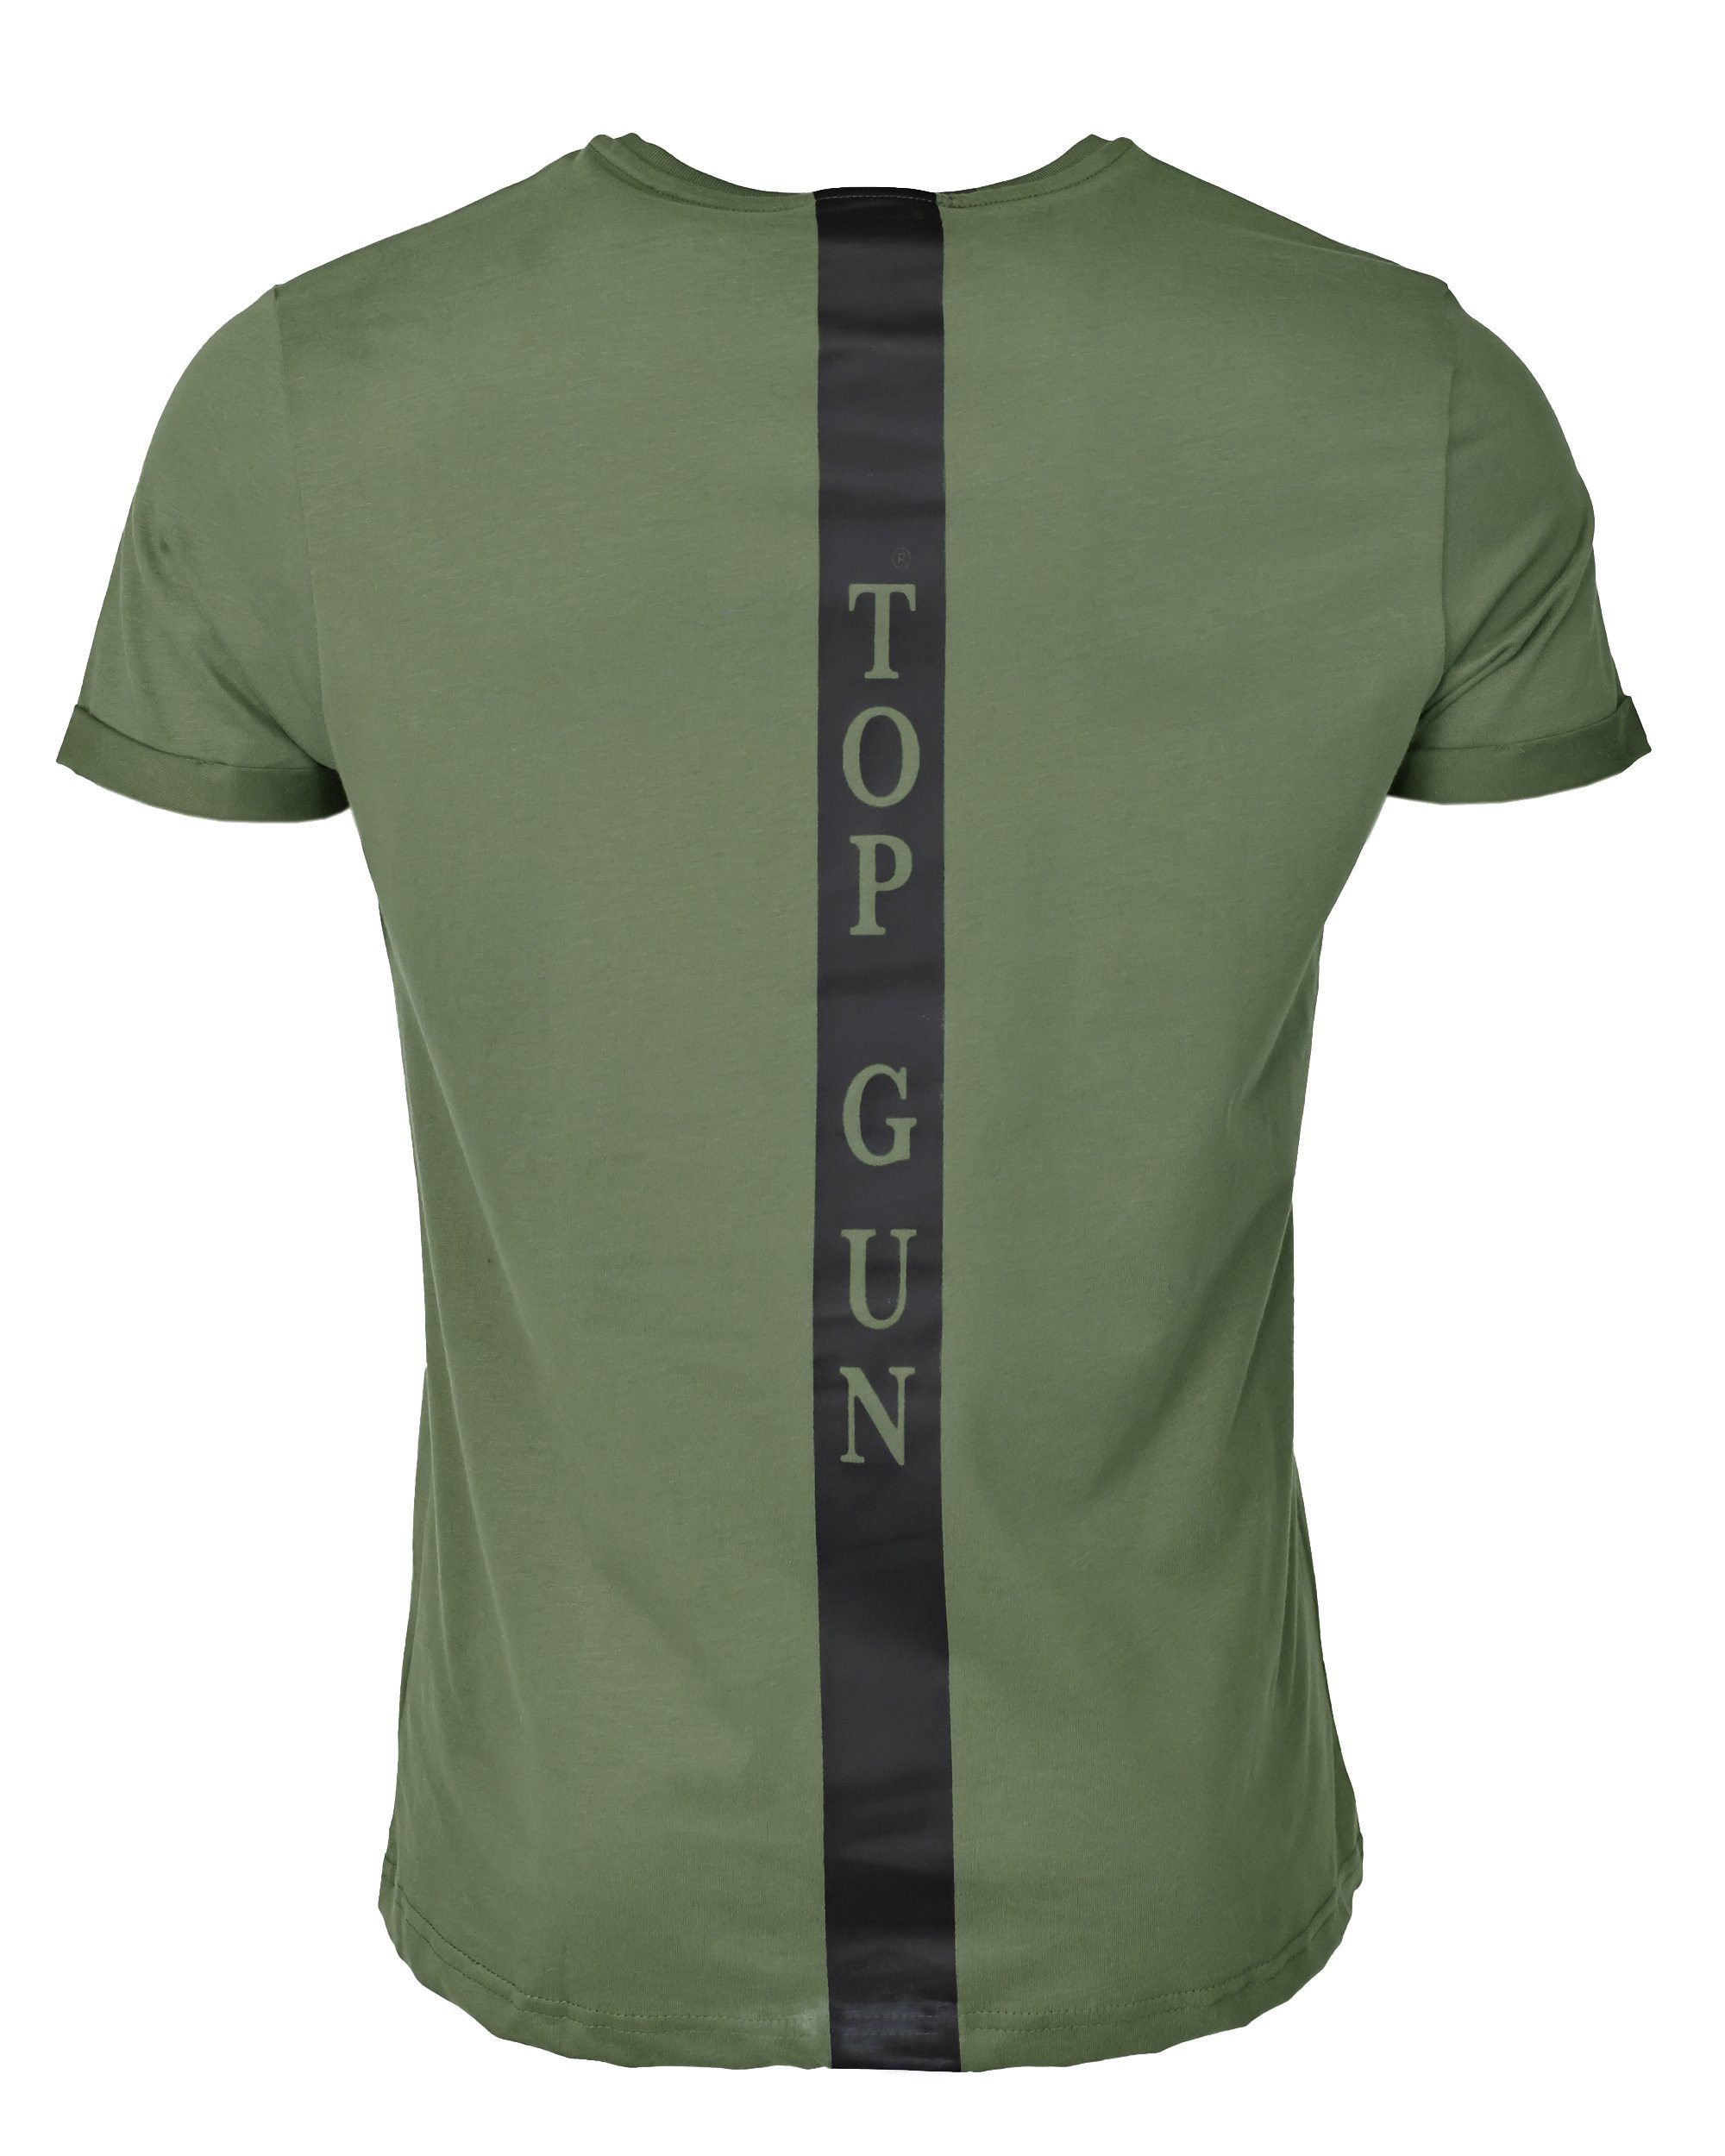 TOP GUN T-Shirt olive TG20213011